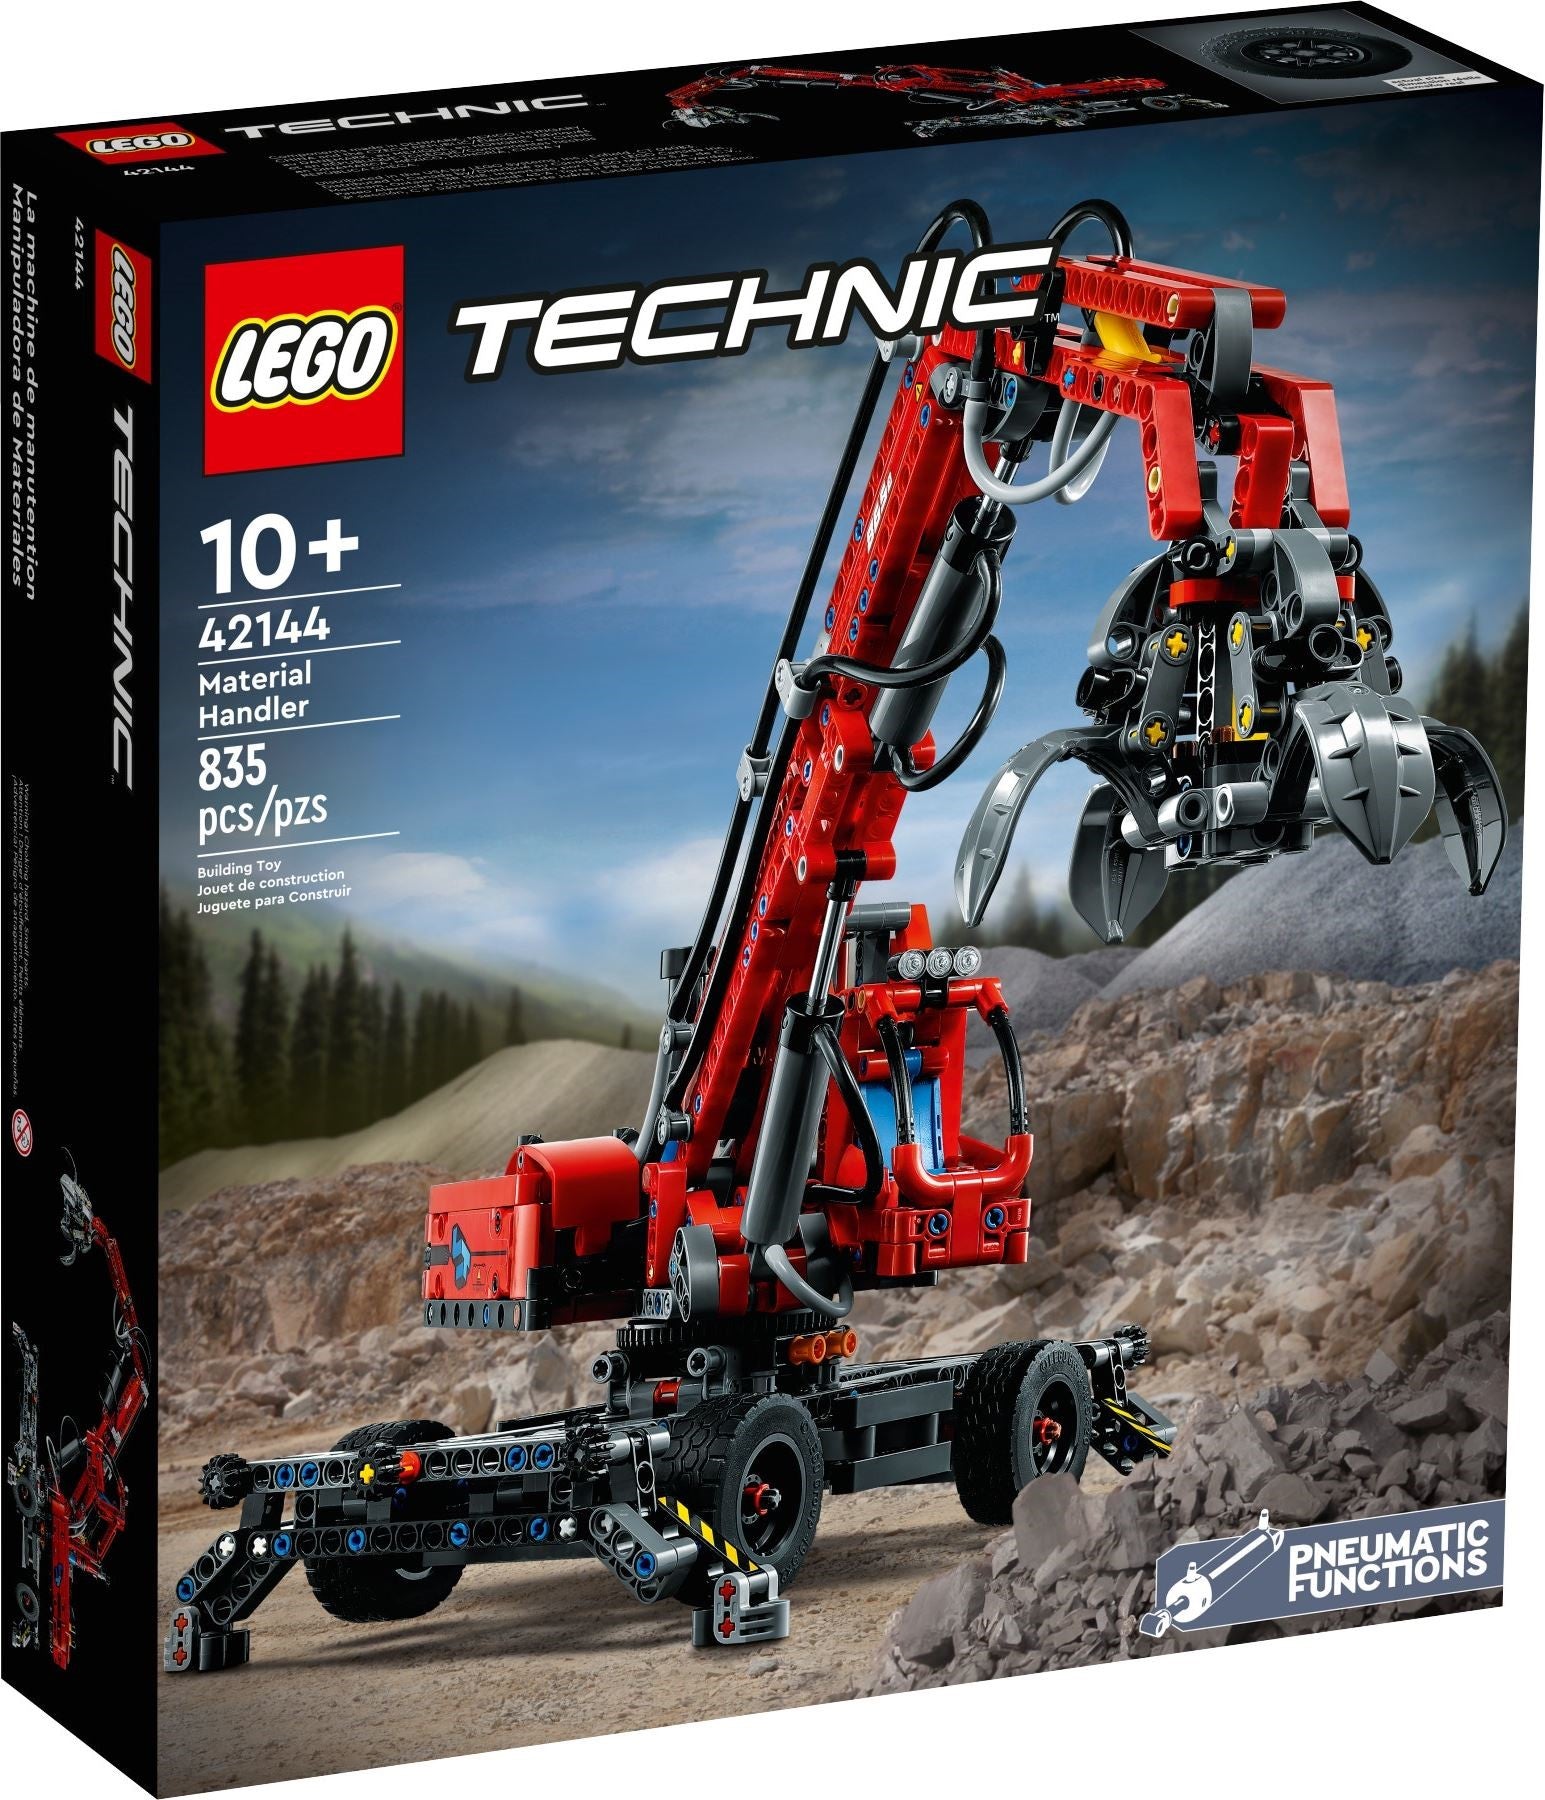 Lego Technic 42144 - Material Handler